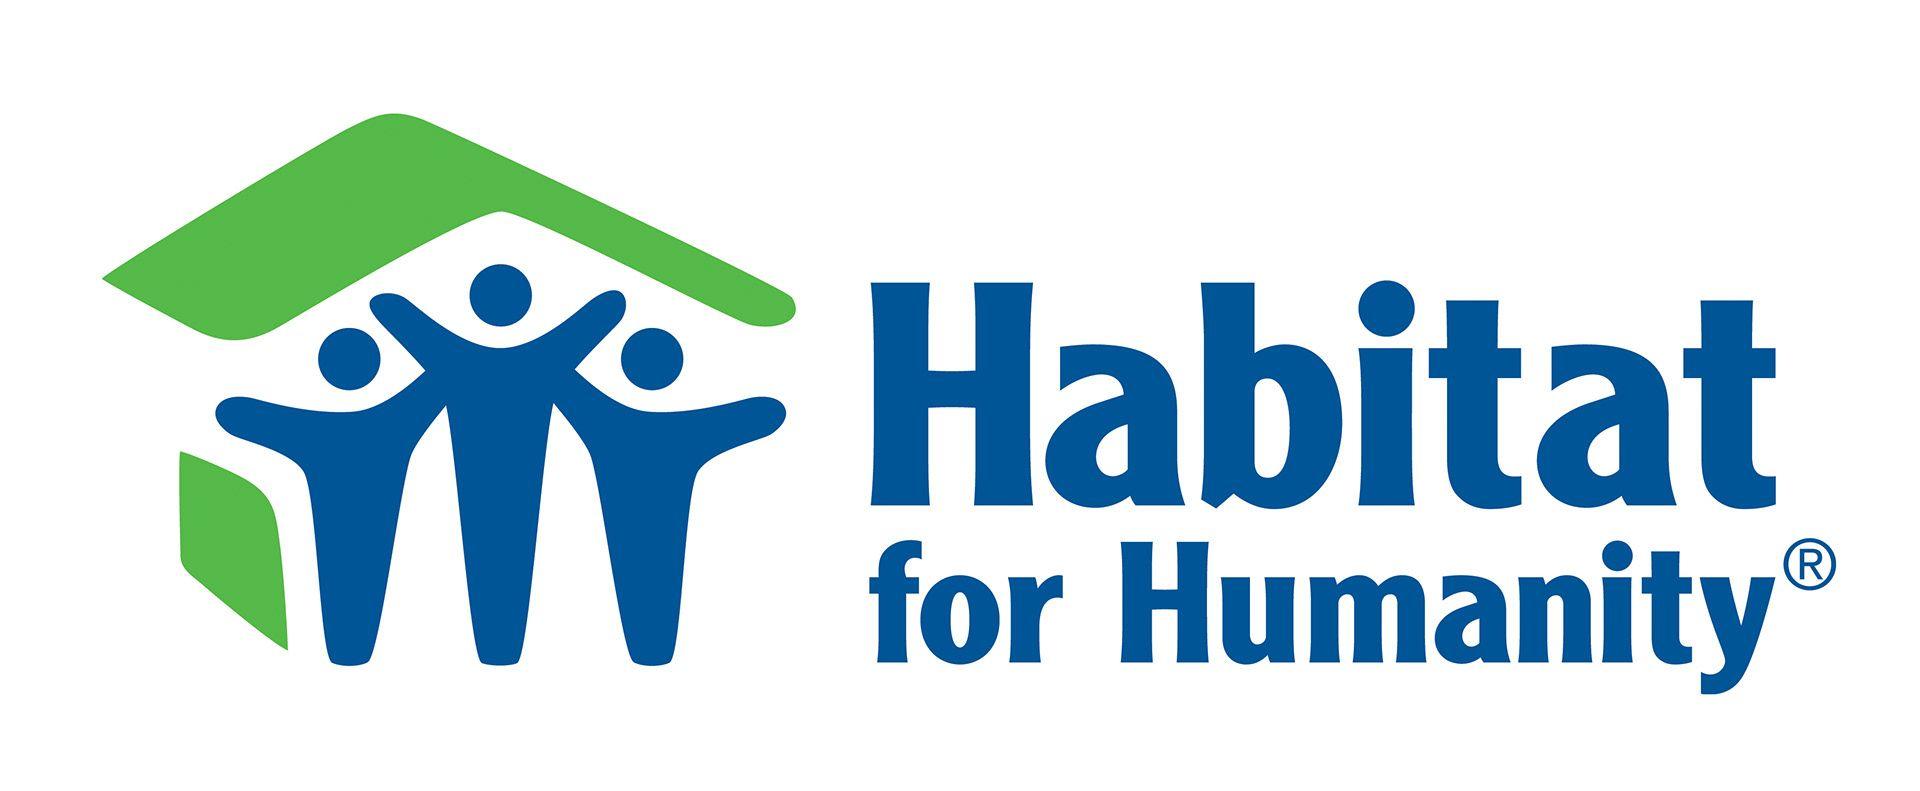 Organization Logo - Words by Design - Habitat for Humanity global logo redesign